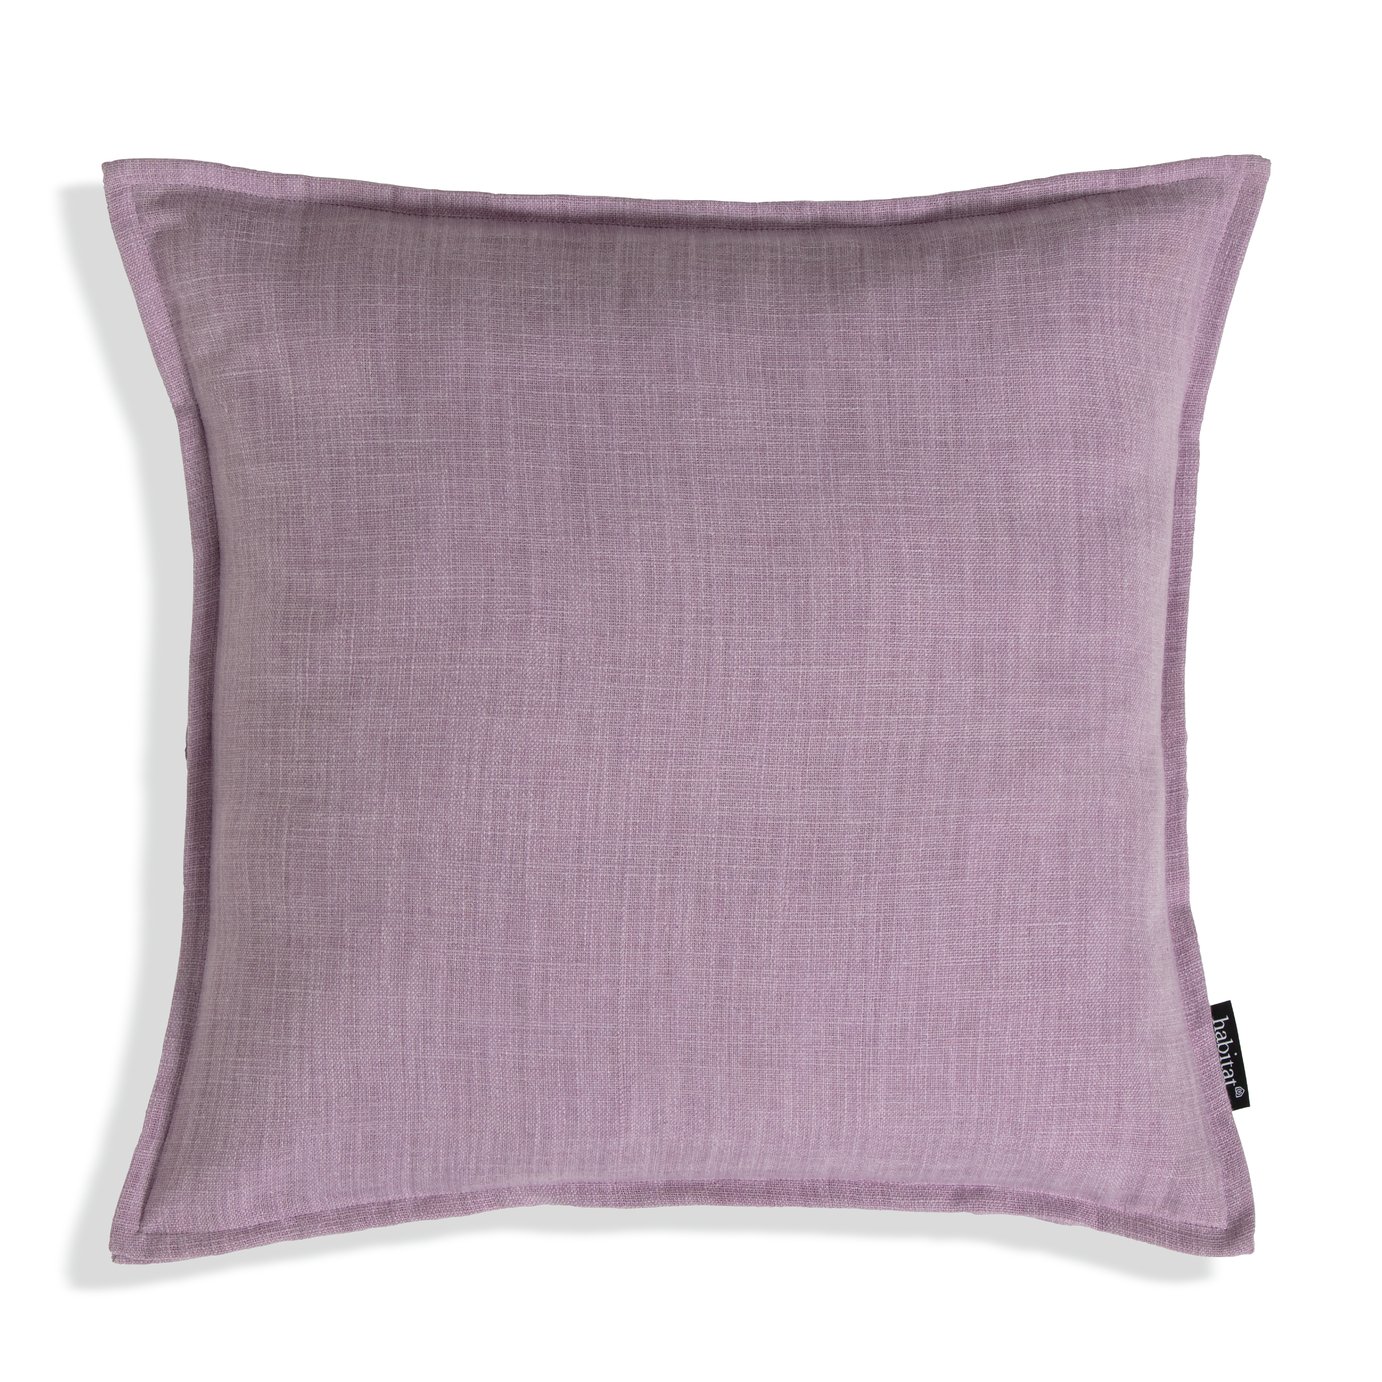 Habitat Linen Look Cushion - Lilac - 50x50cm